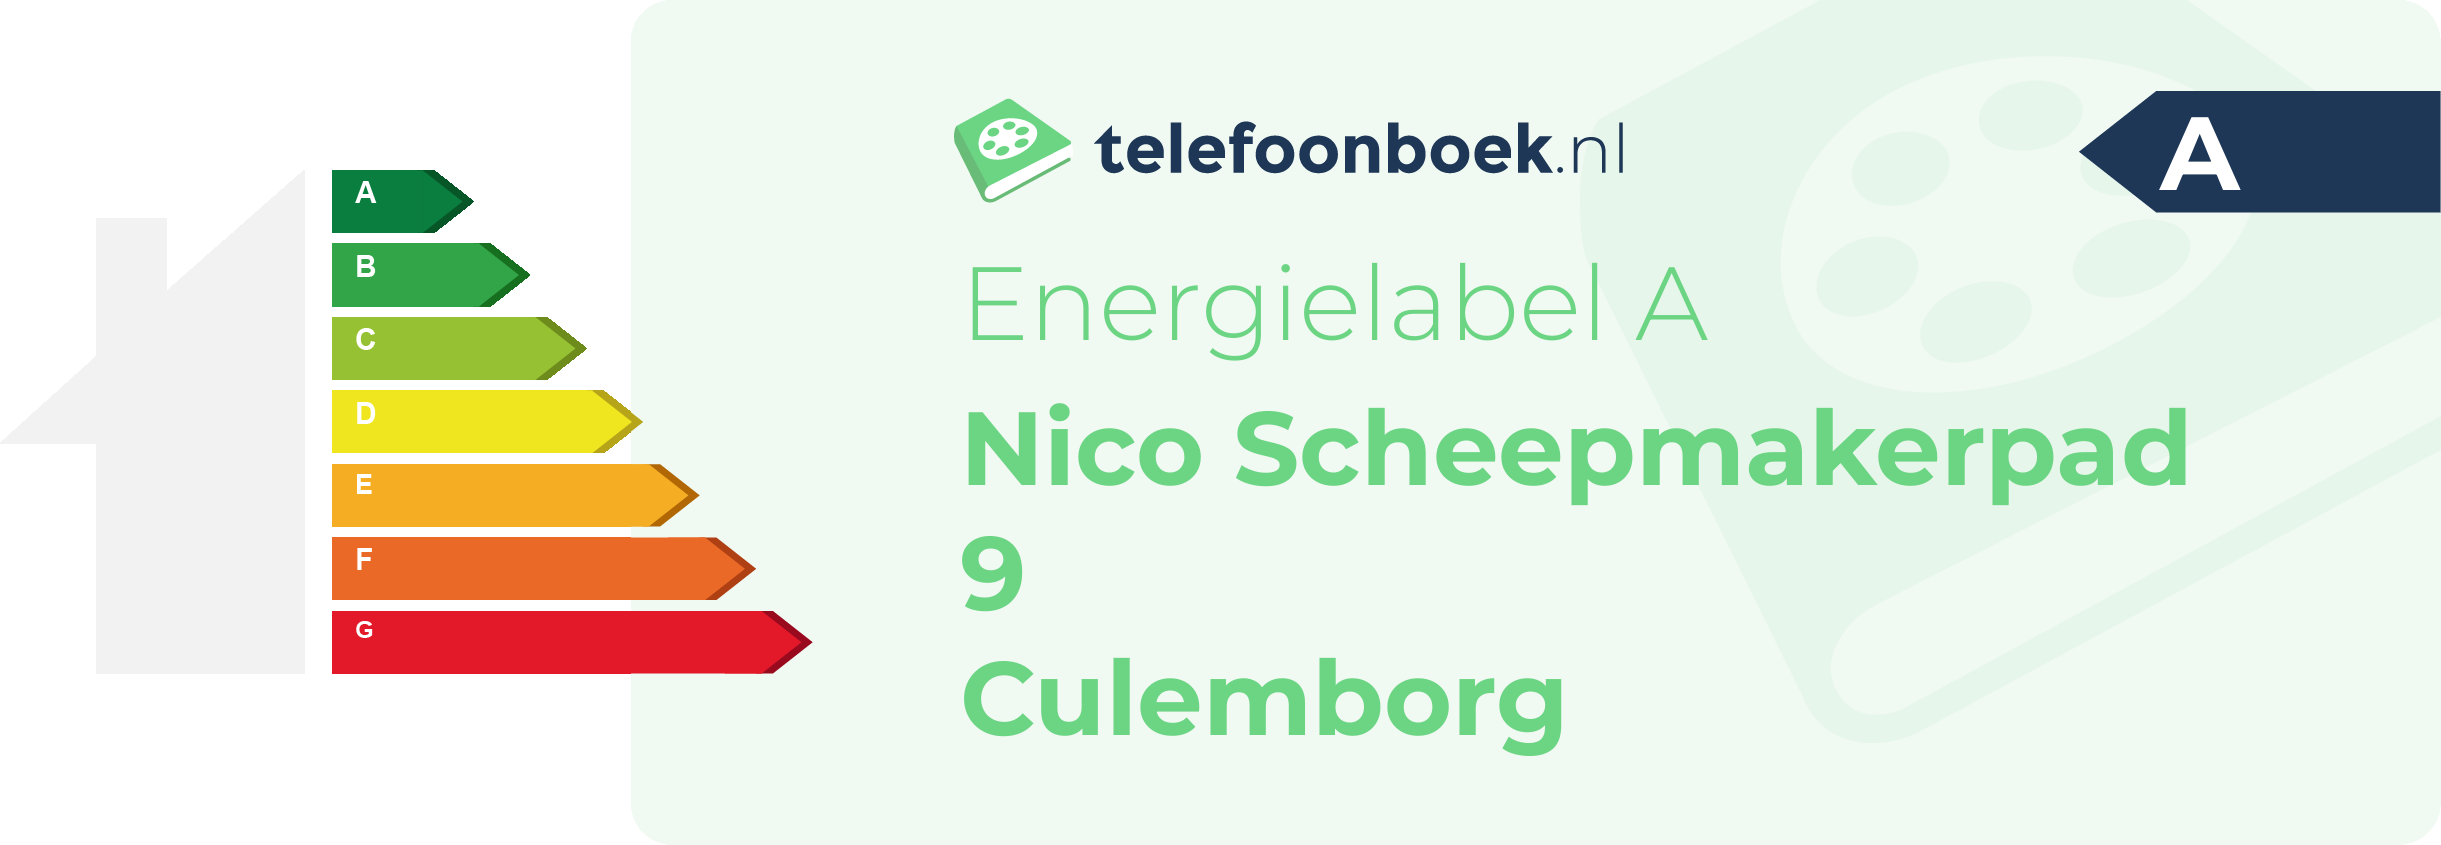 Energielabel Nico Scheepmakerpad 9 Culemborg